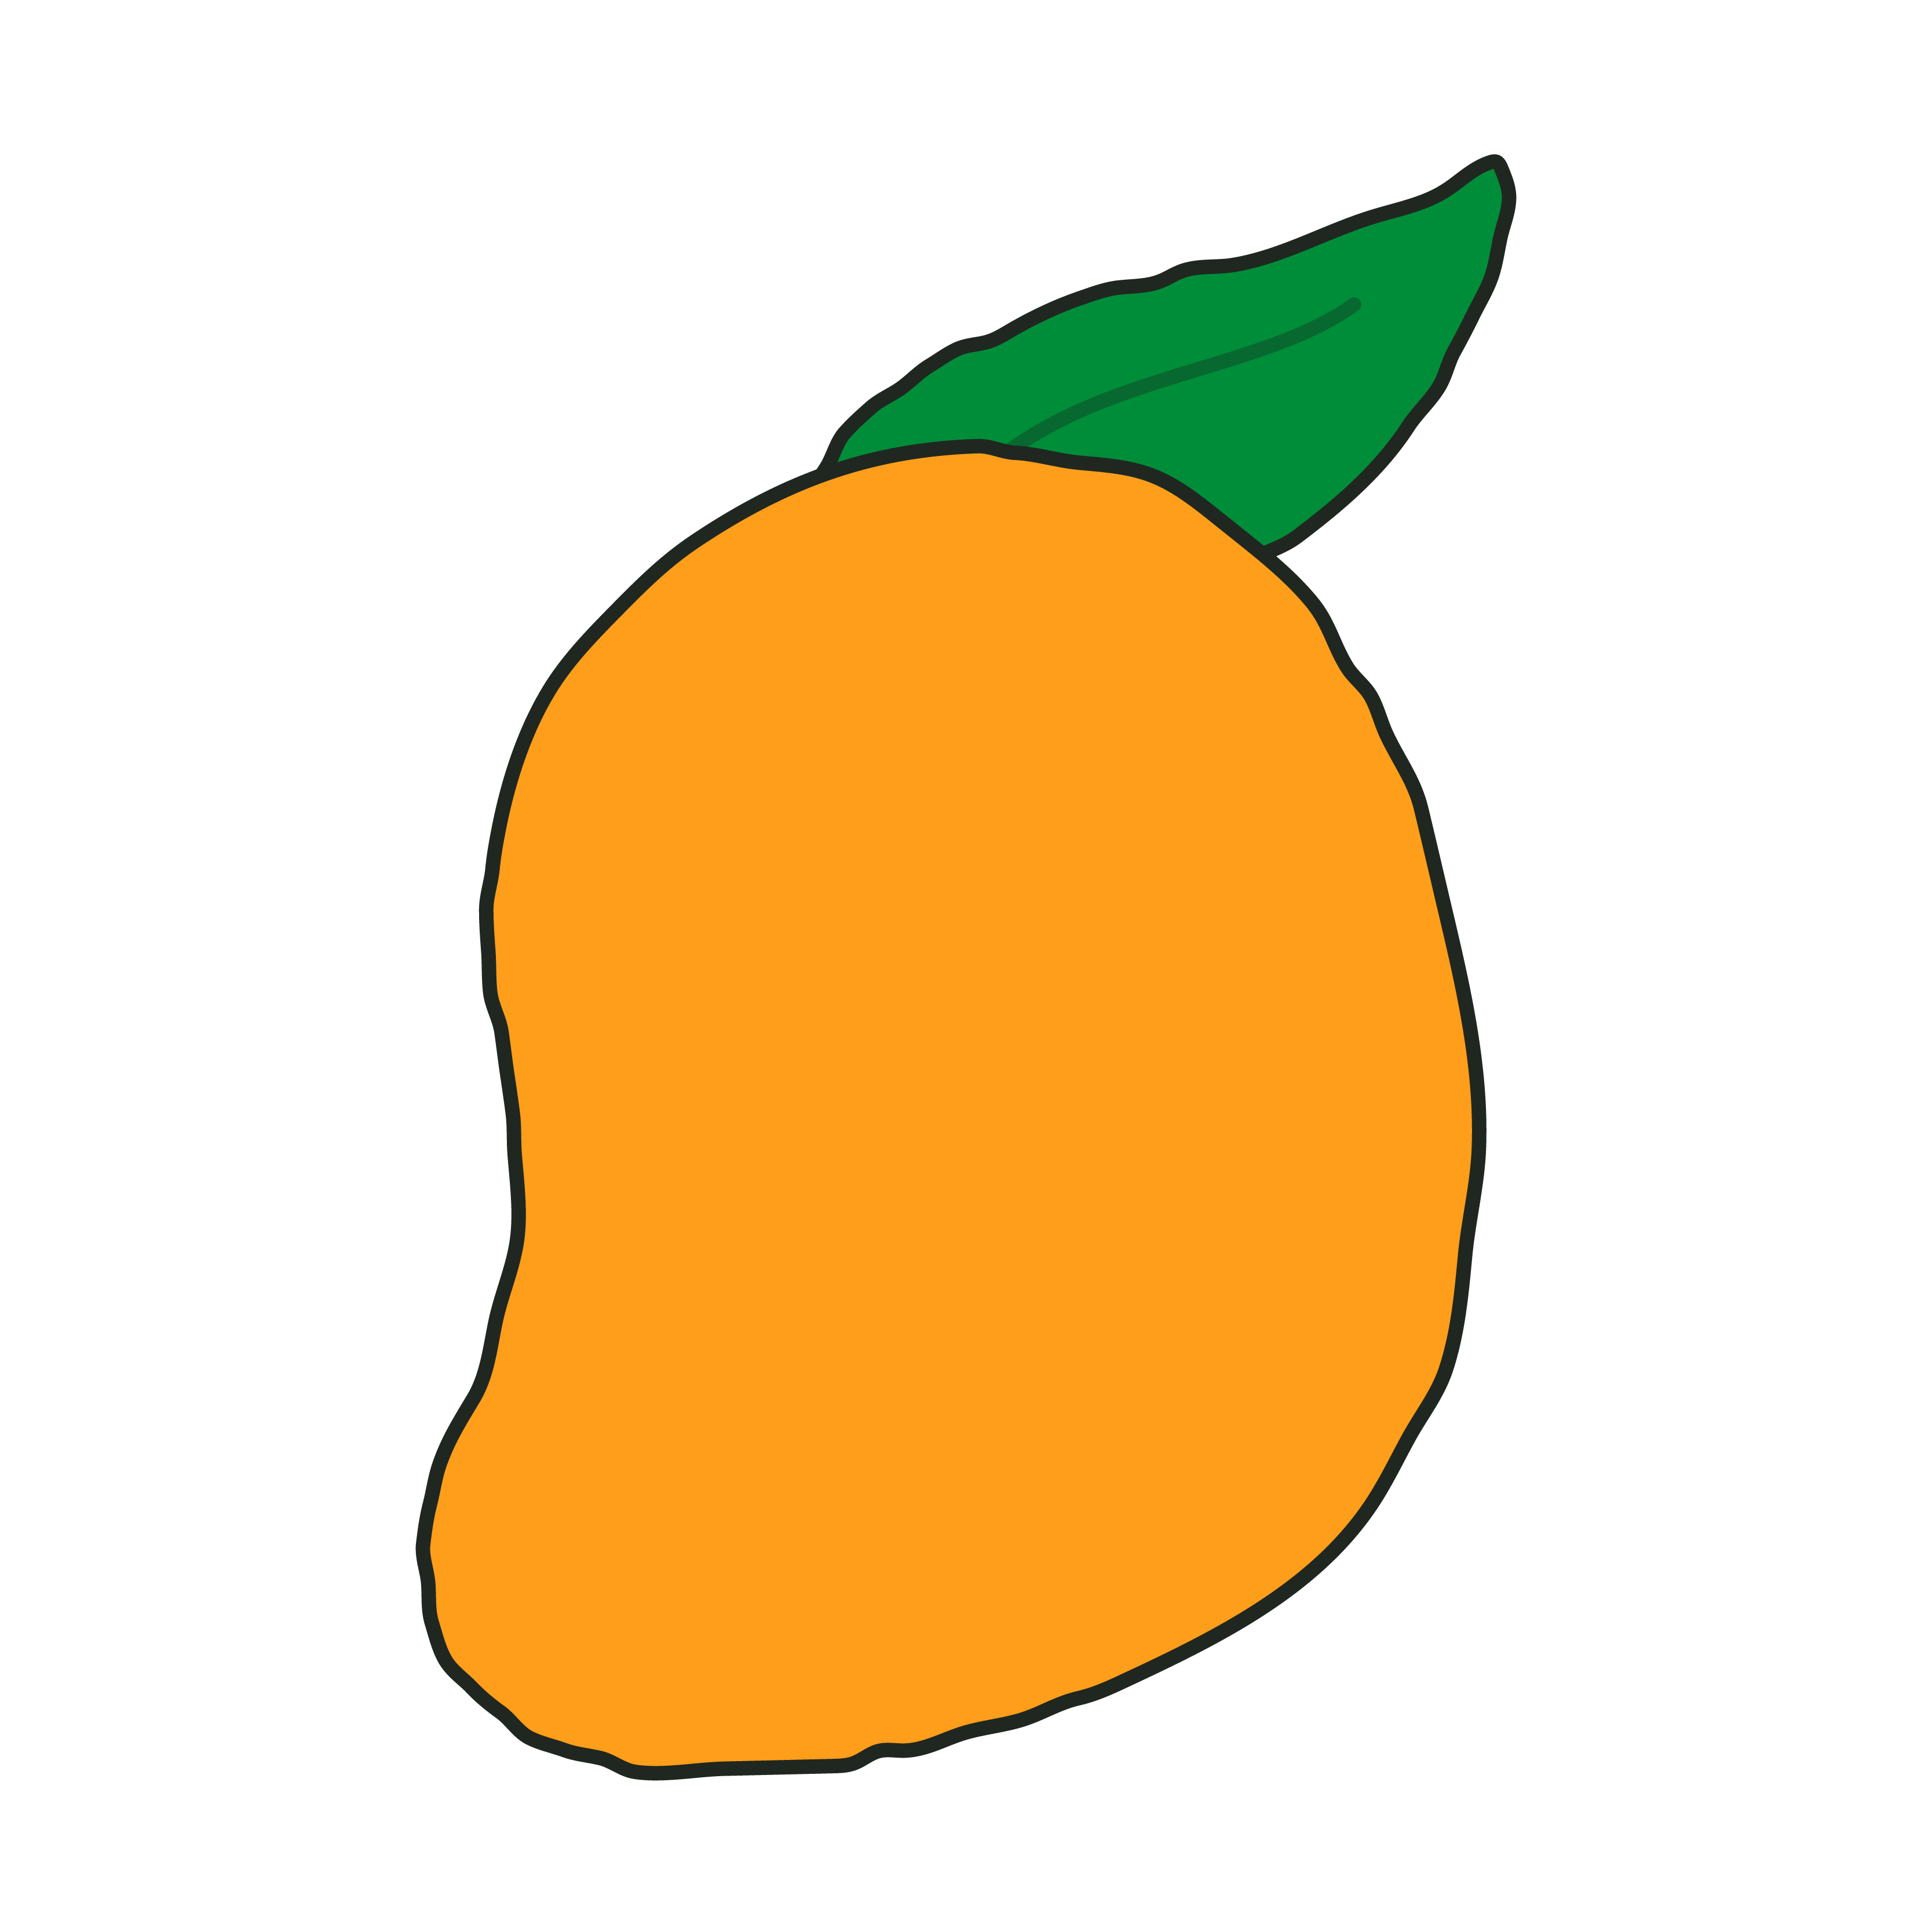 an illustration of mango